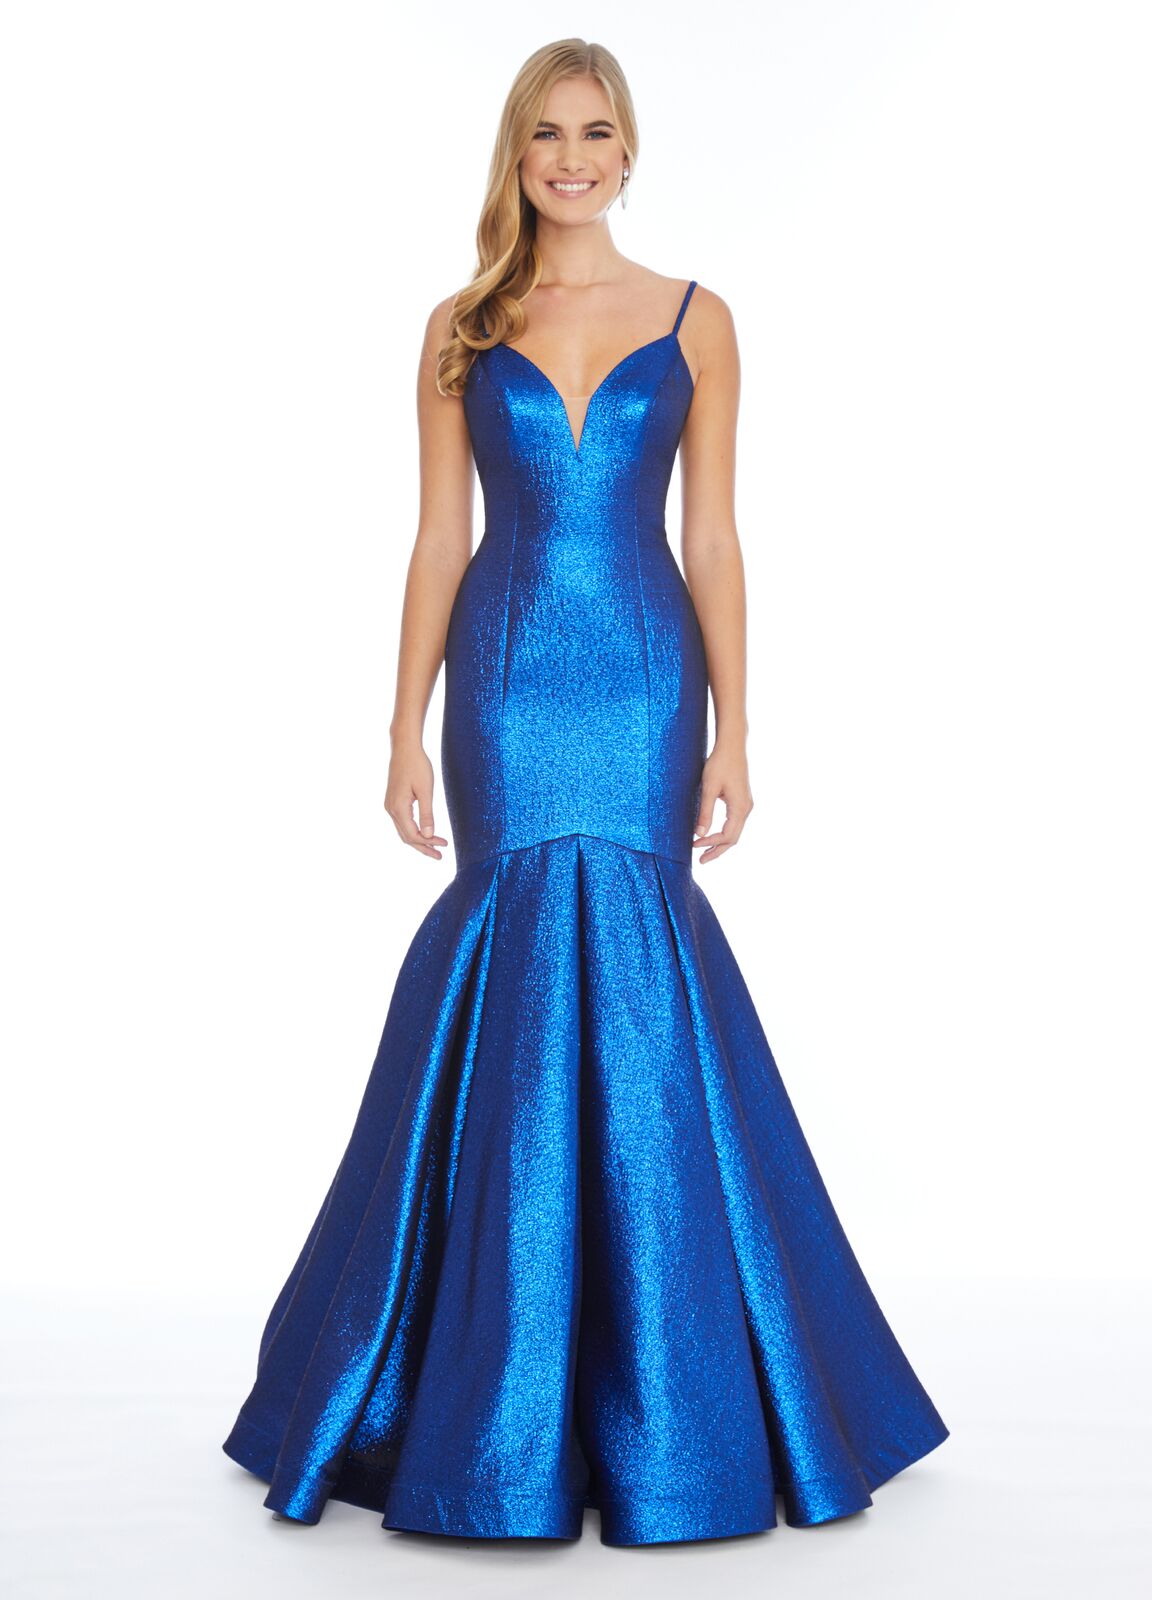 Ashley Lauren 1860 Royal Blue size 10 metallic mermaid prom dress Pageant Gown